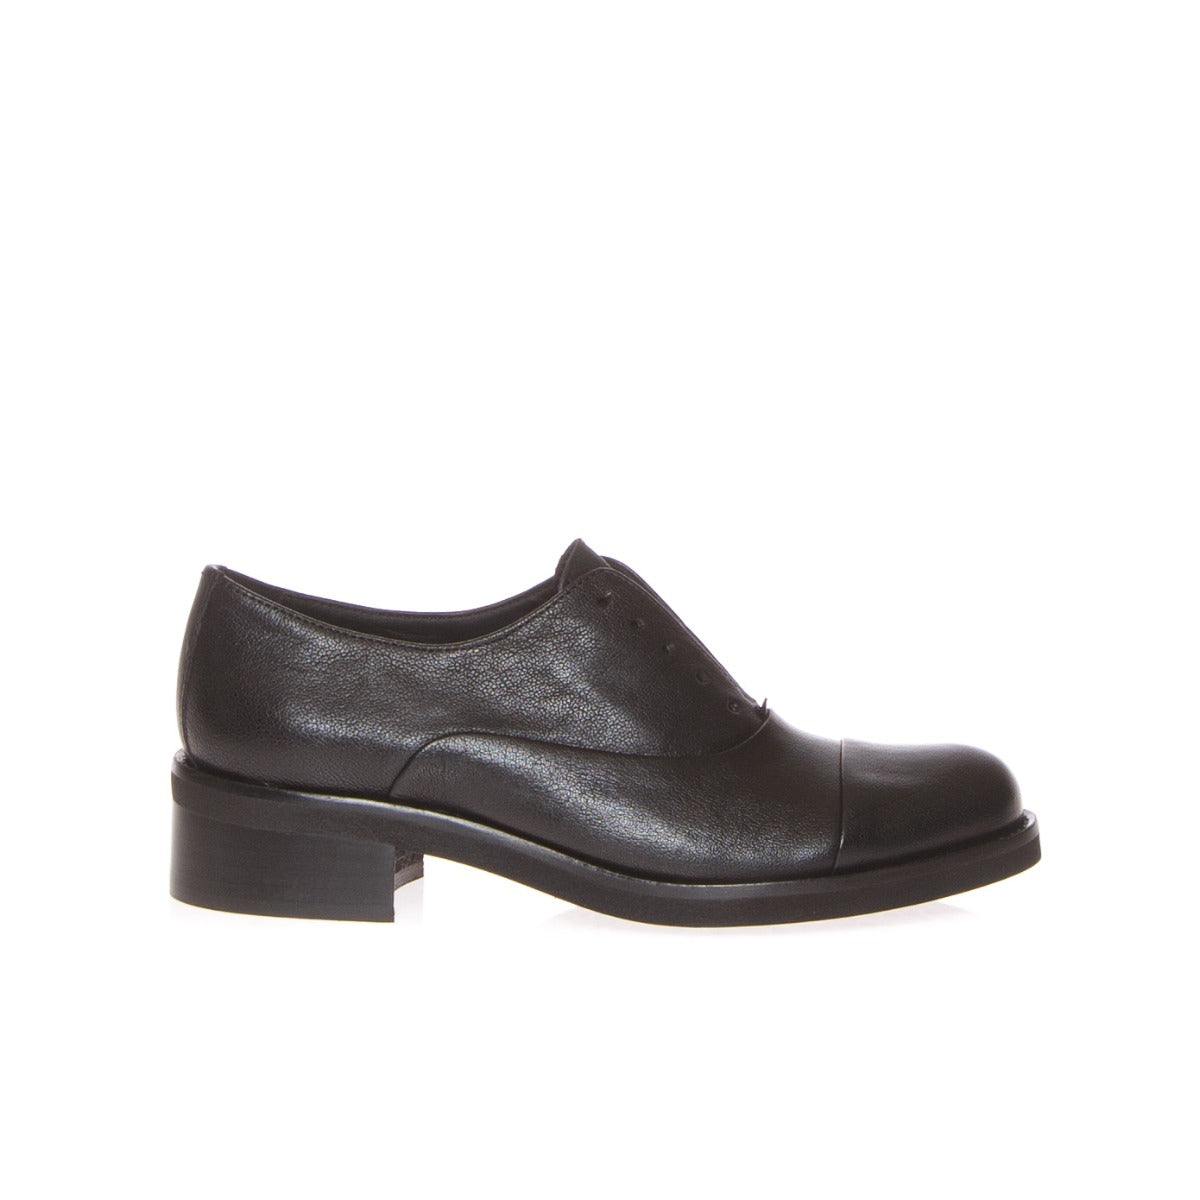 mat20-slip-on-donna-1700-west-pelle-nero-calzature